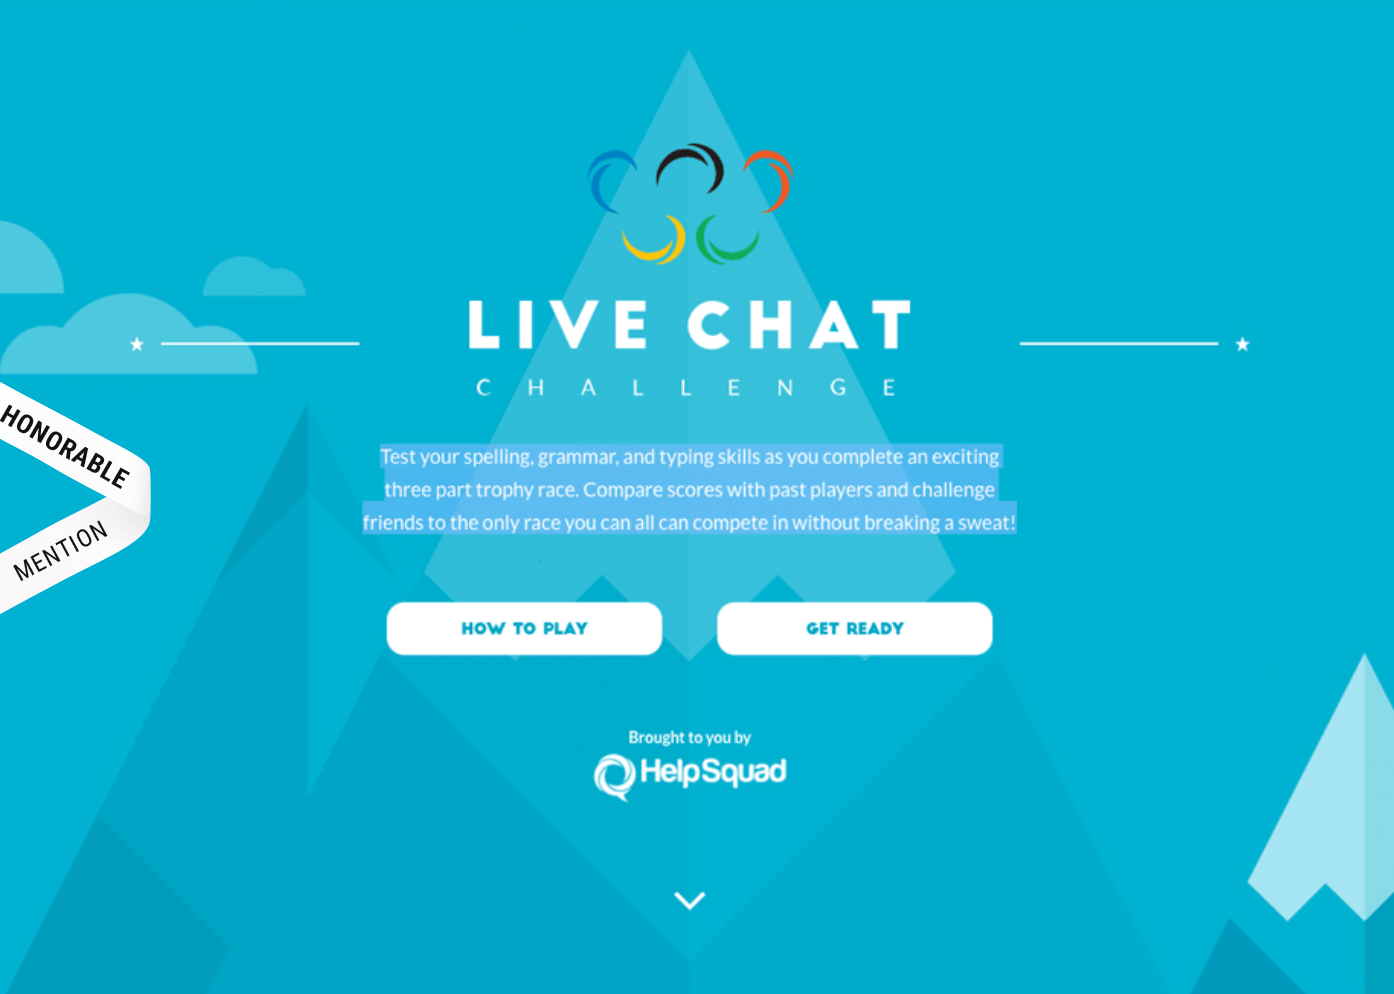 HelpSquad LiveHelpNow Live Chat Challenge